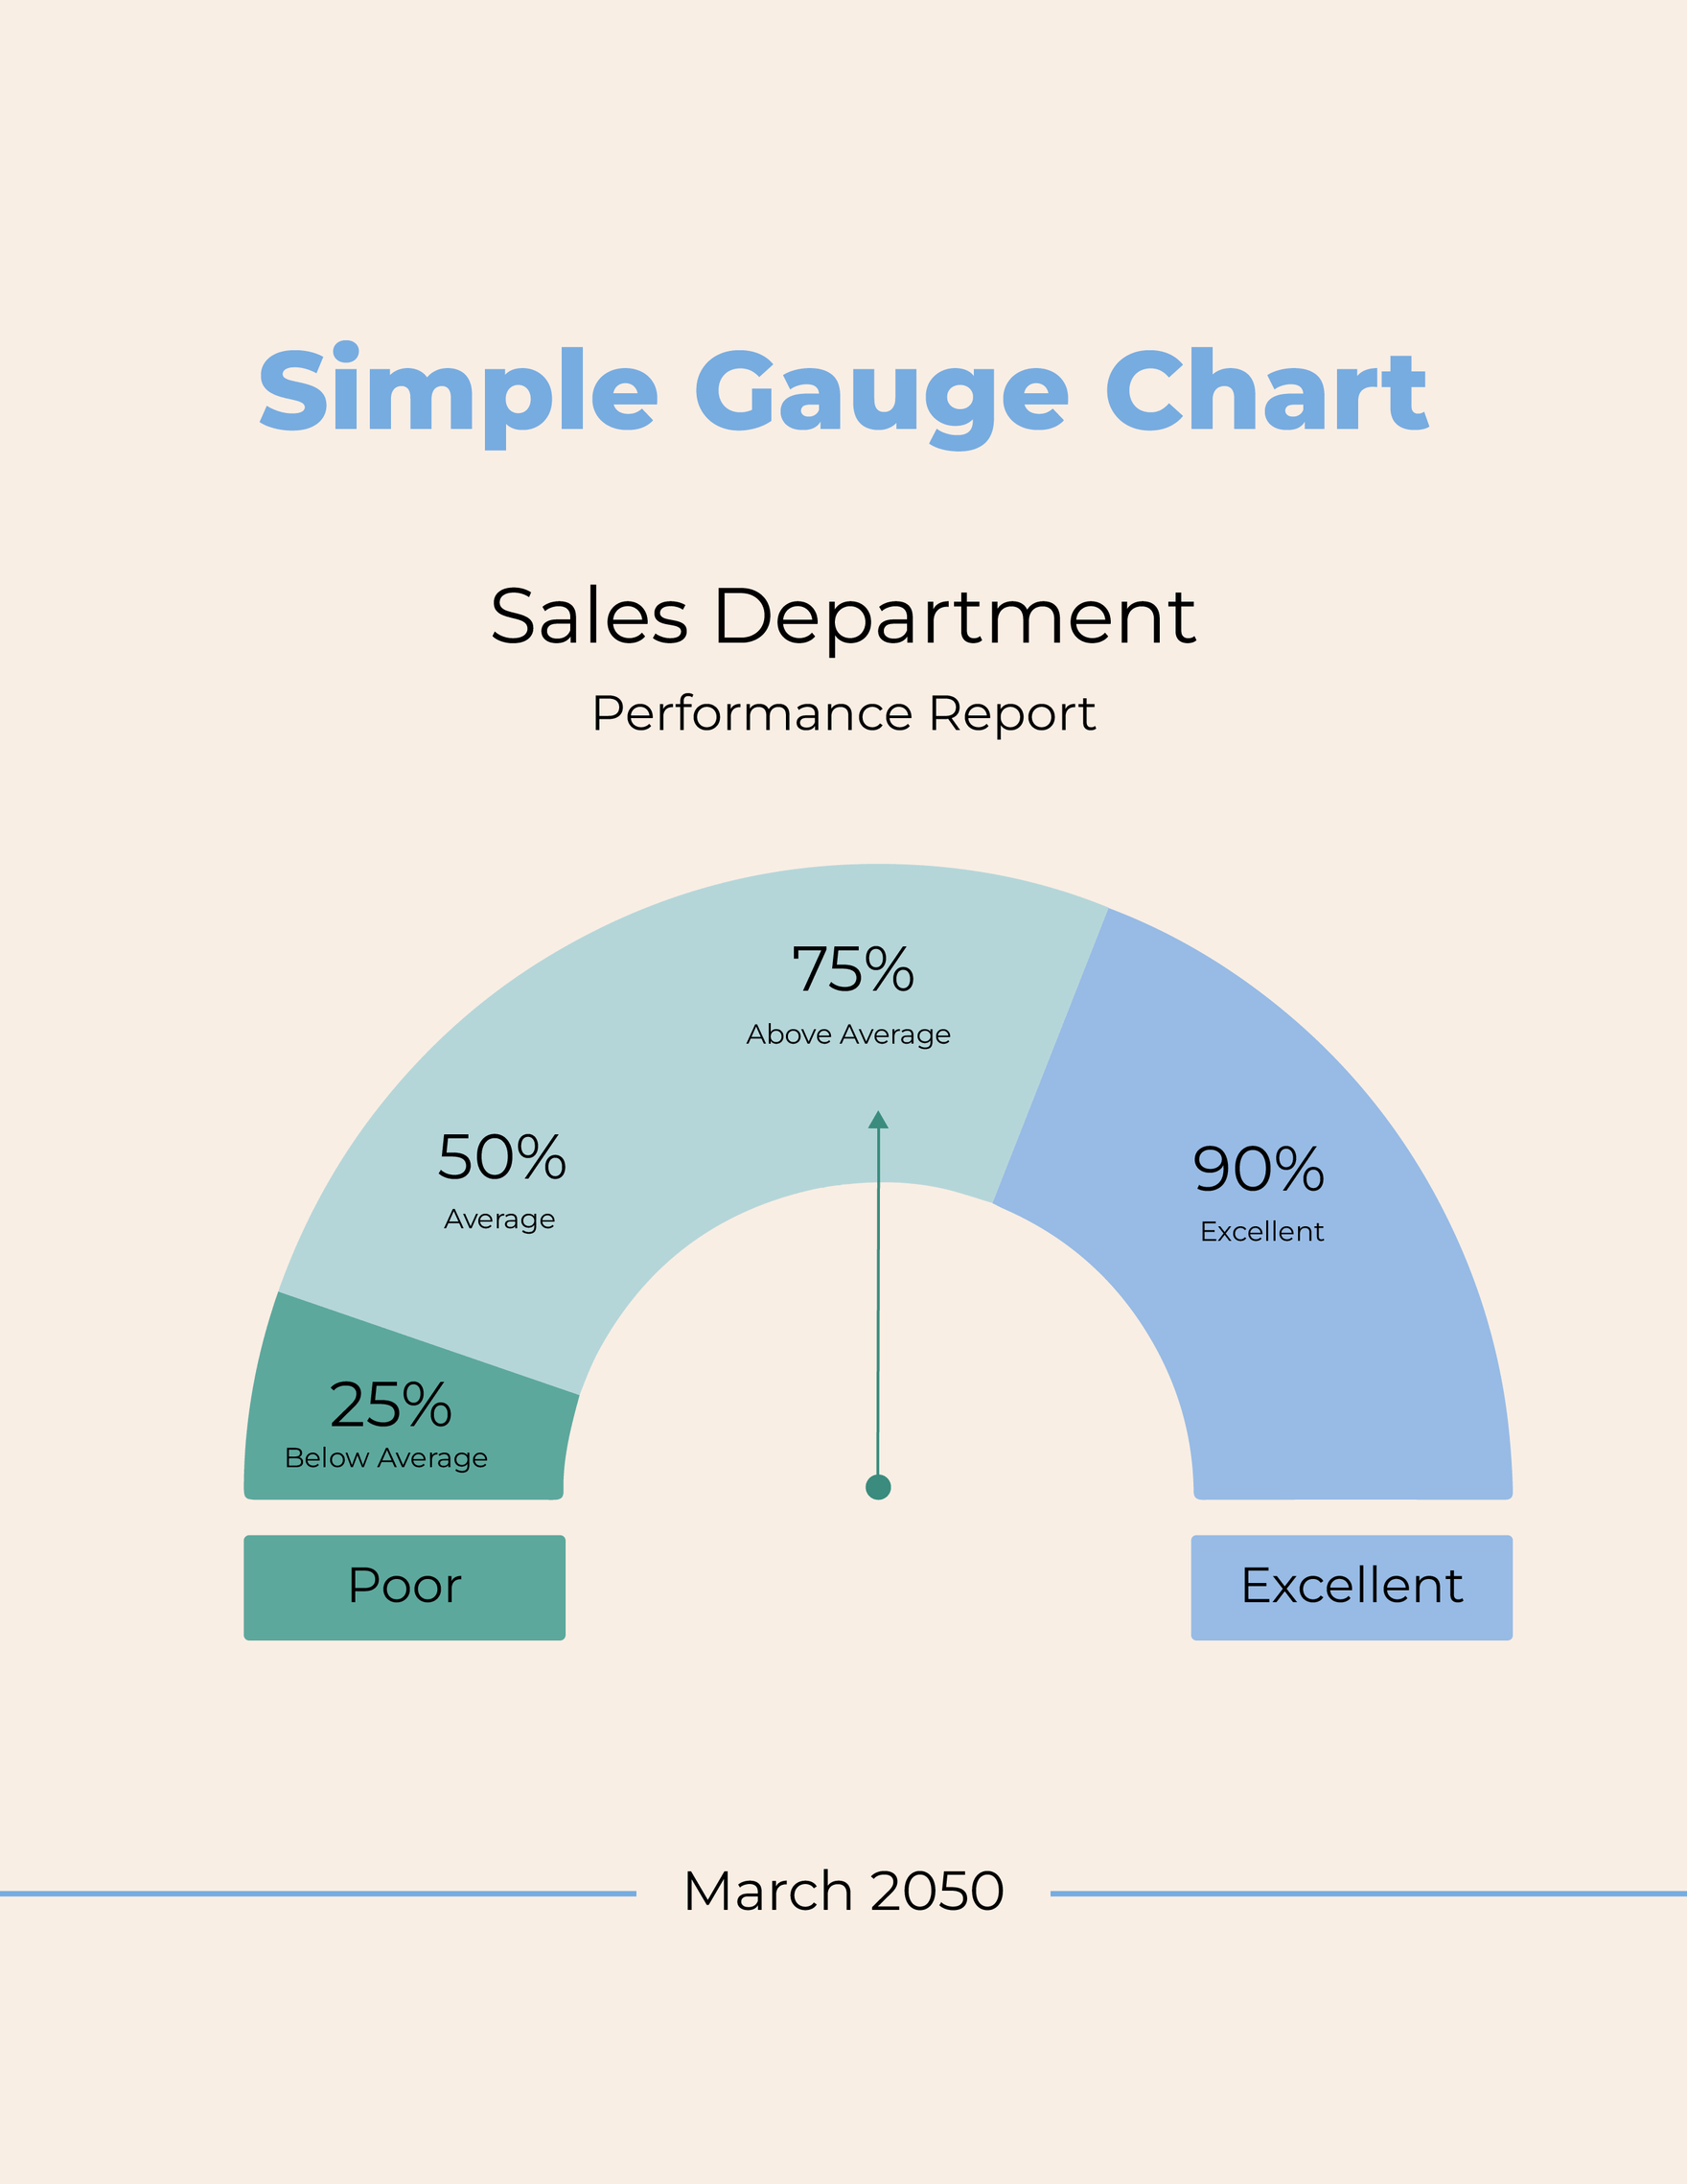 Free Simple Gauge Chart in PDF, Illustrator